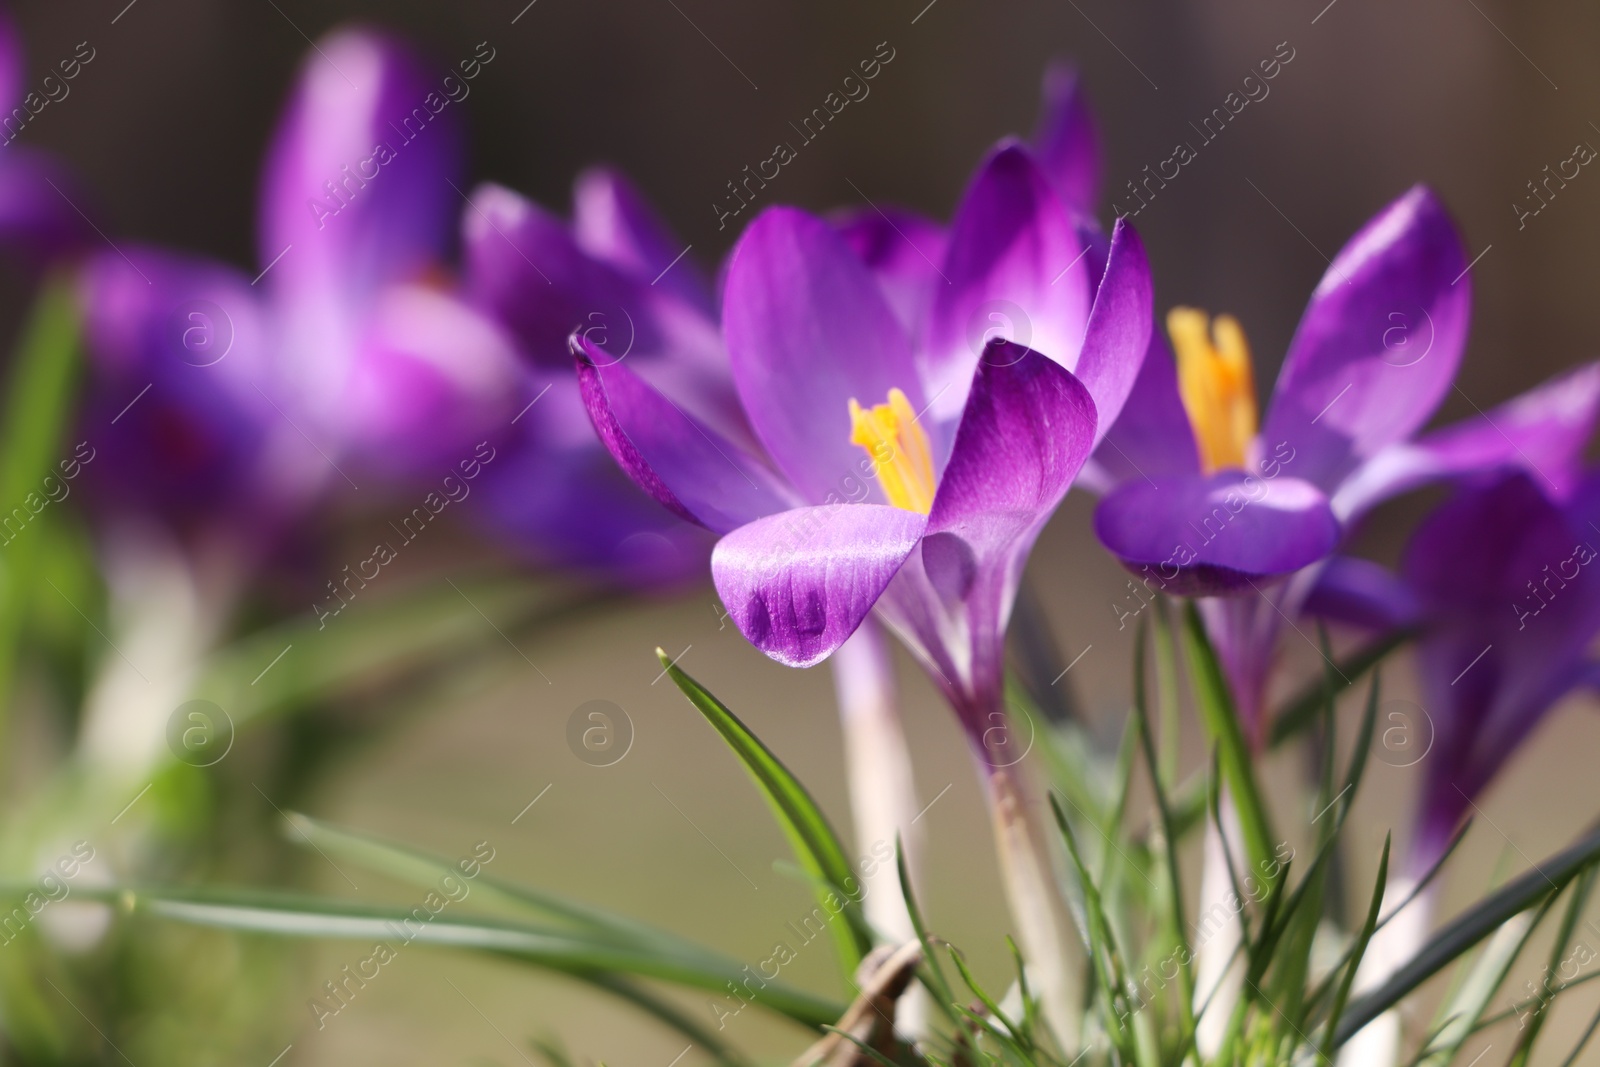 Photo of Fresh purple crocus flowers growing on blurred background, closeup